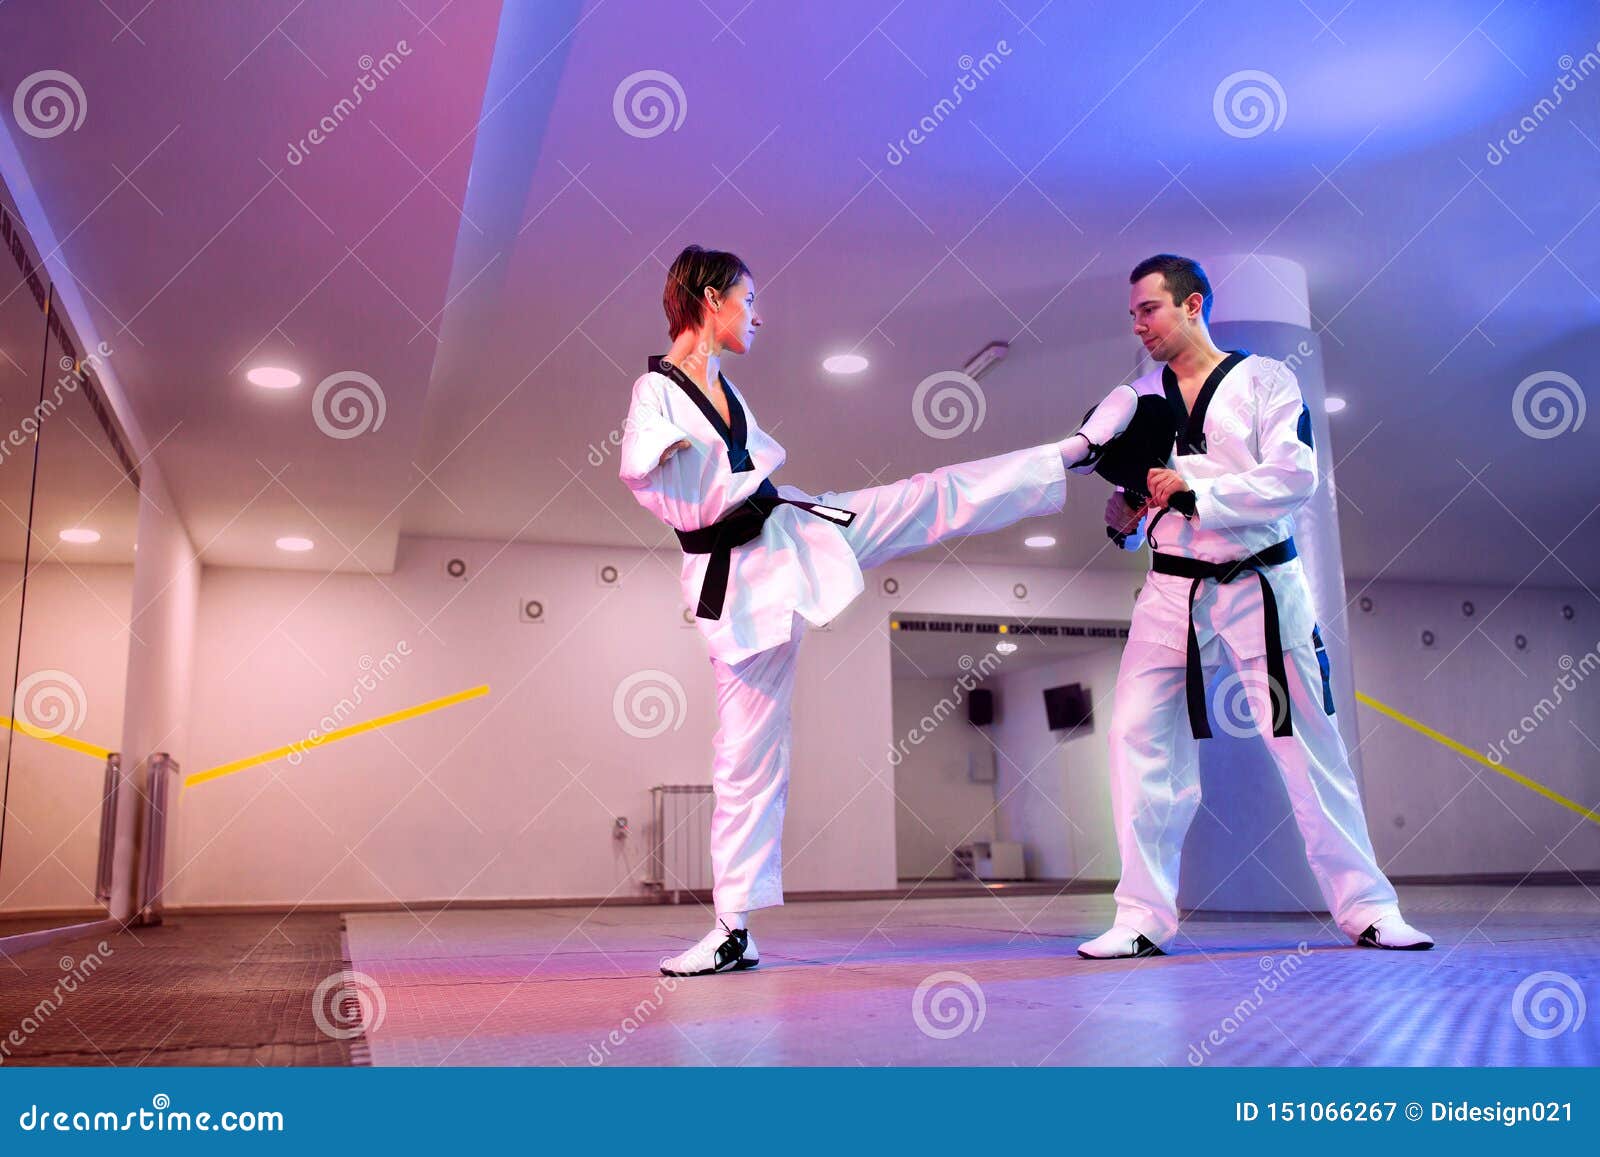 para-taekwondo in purple-blue light background